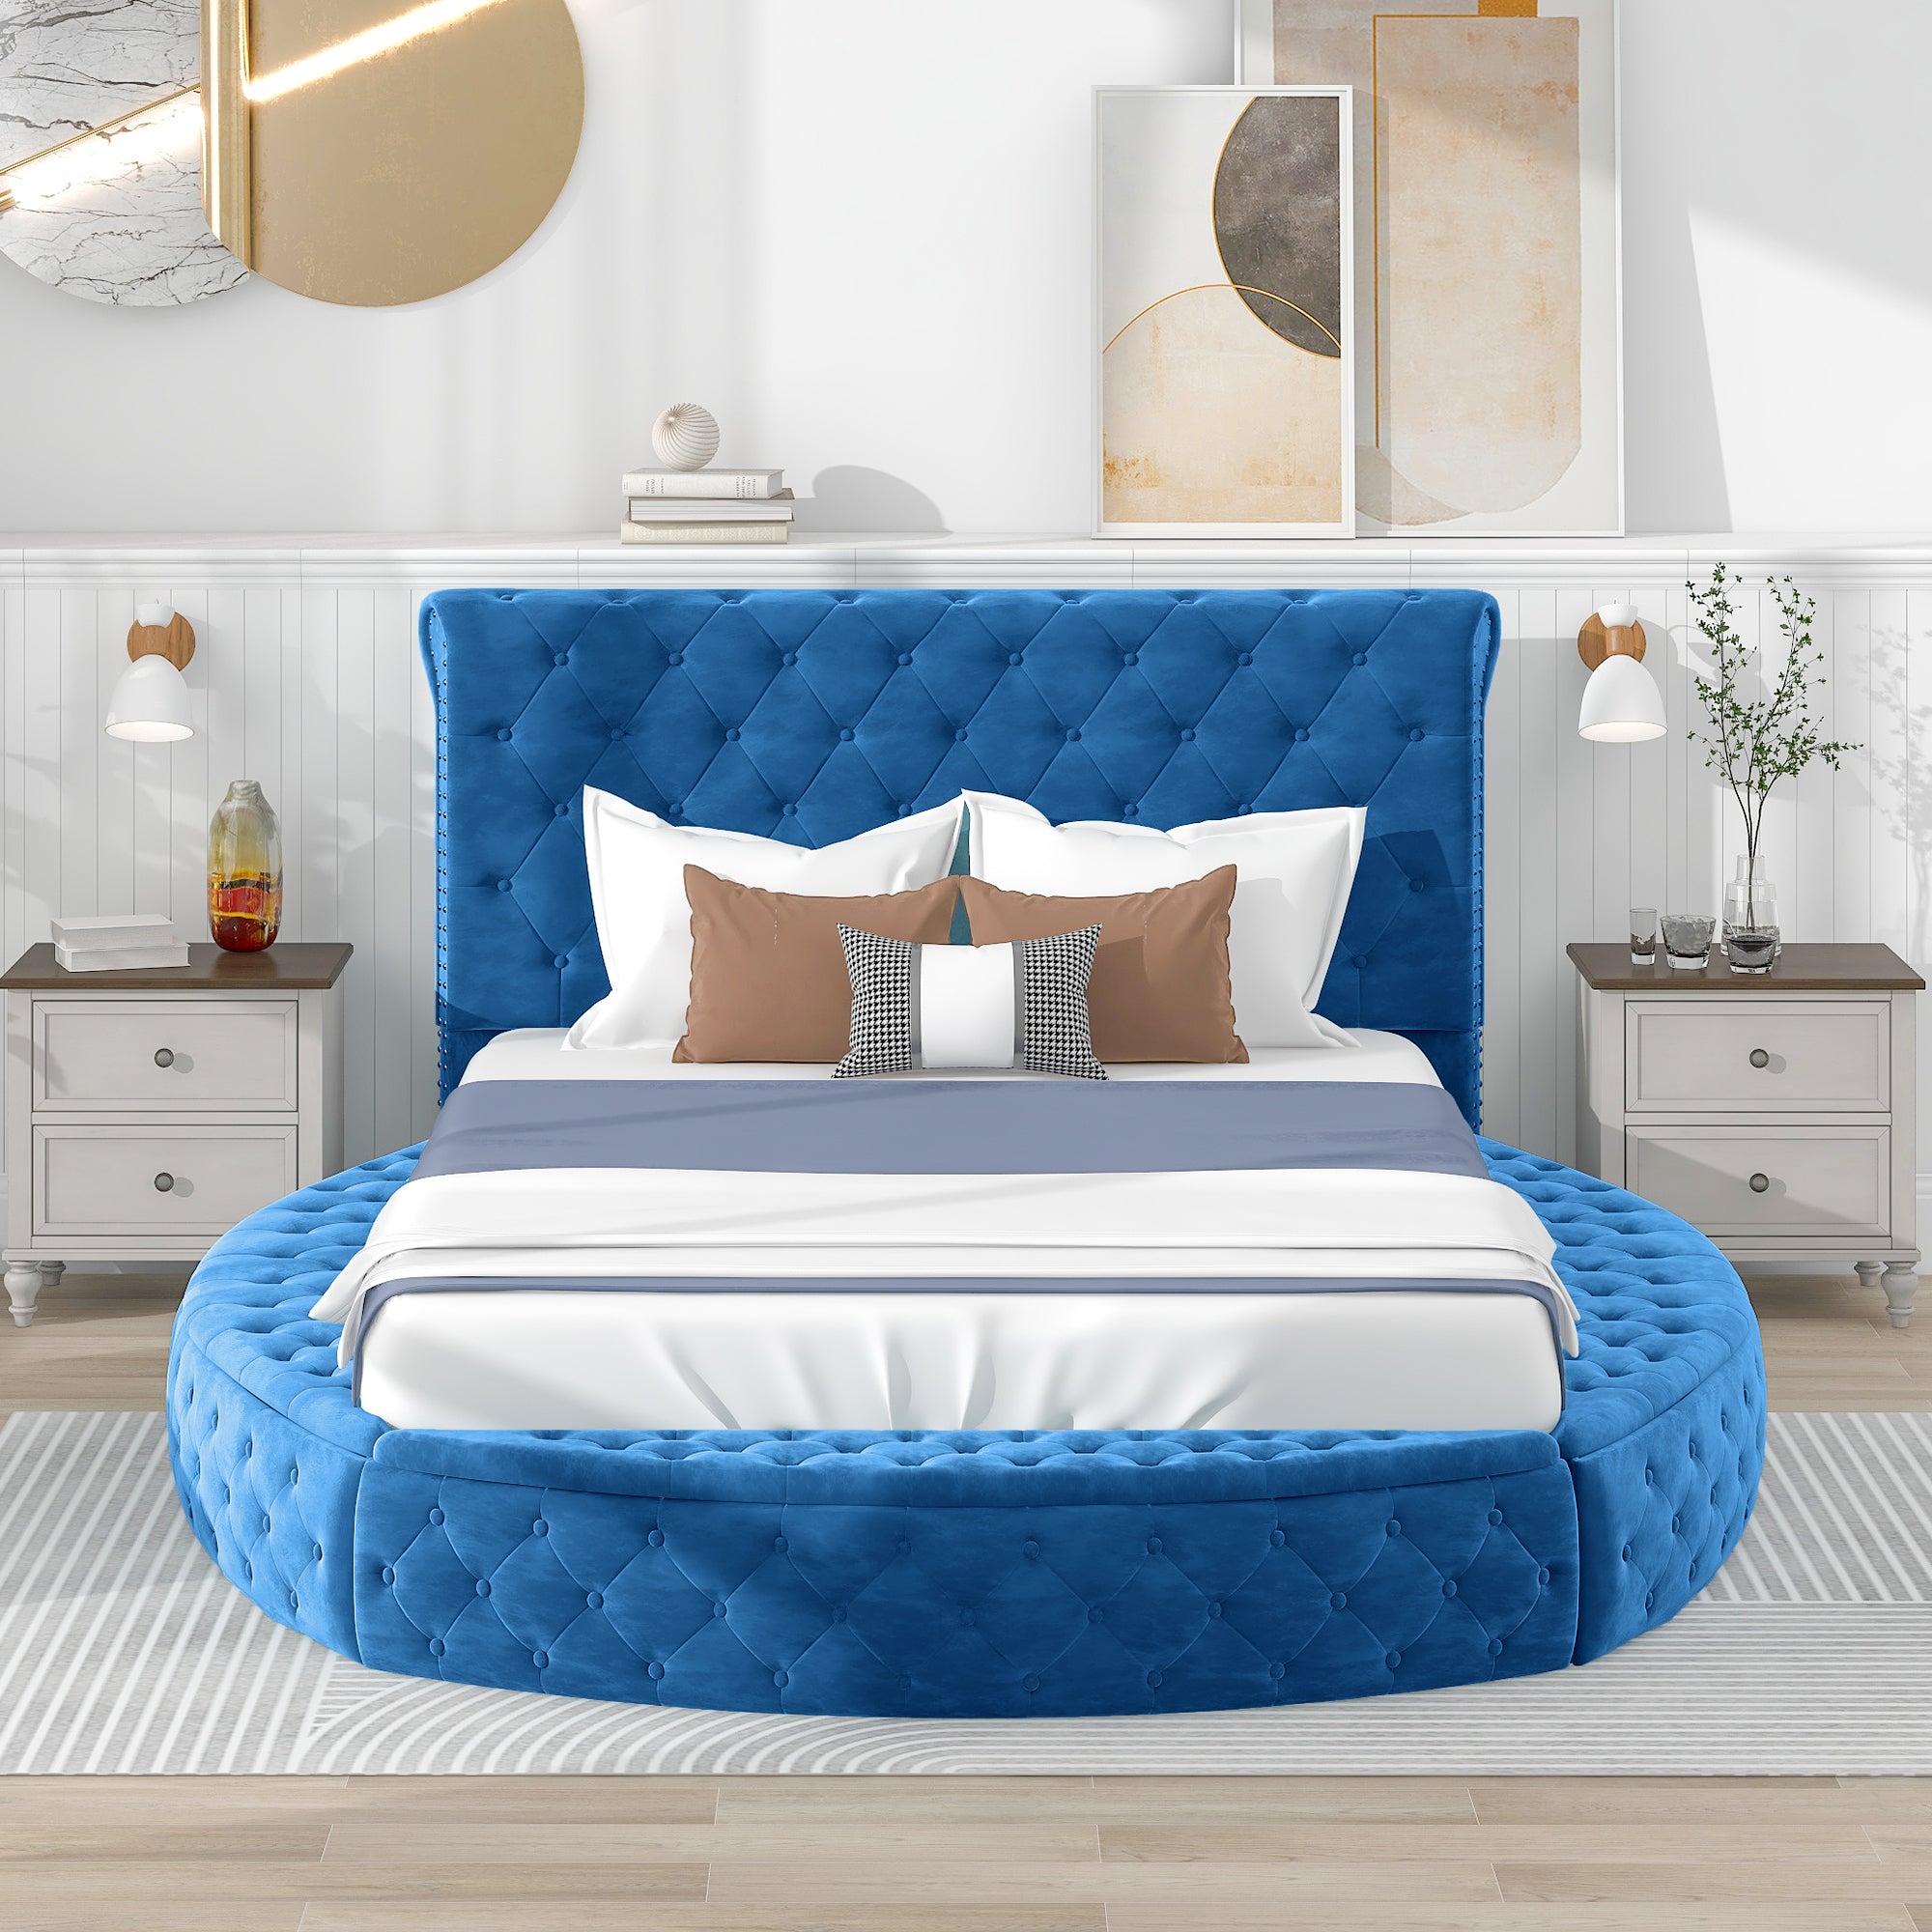 Queen Size Round Inner Bed (Blue)